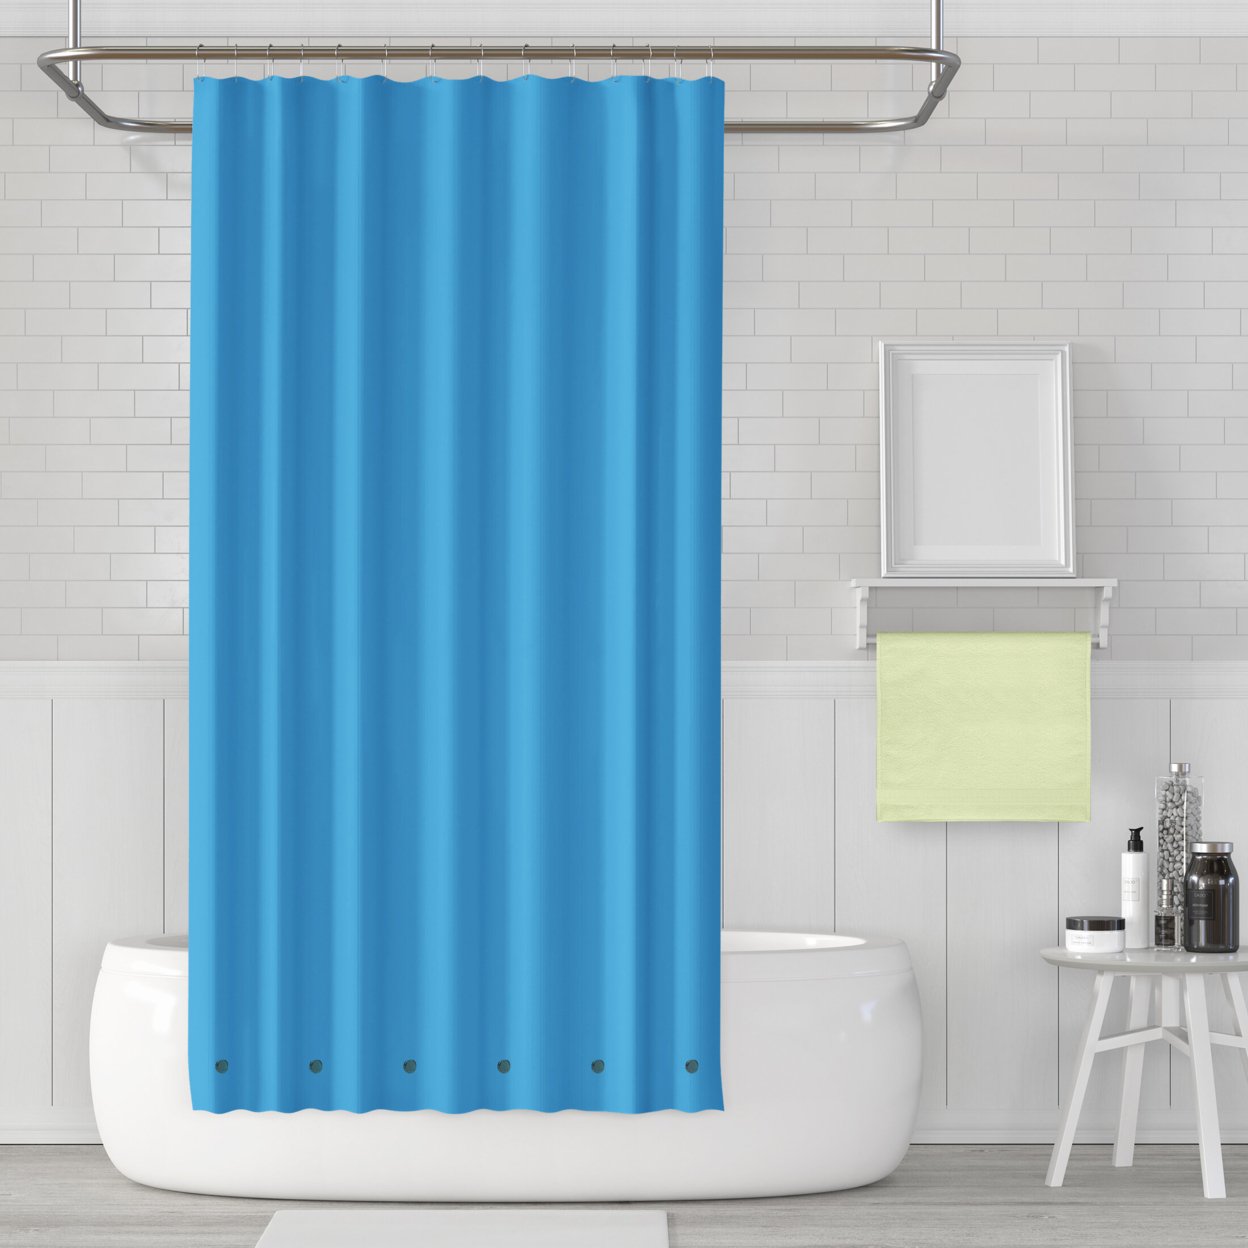 2-Pack: Magnetic Mildew Resistant Solid Vinyl Shower Curtain Liners - Blue